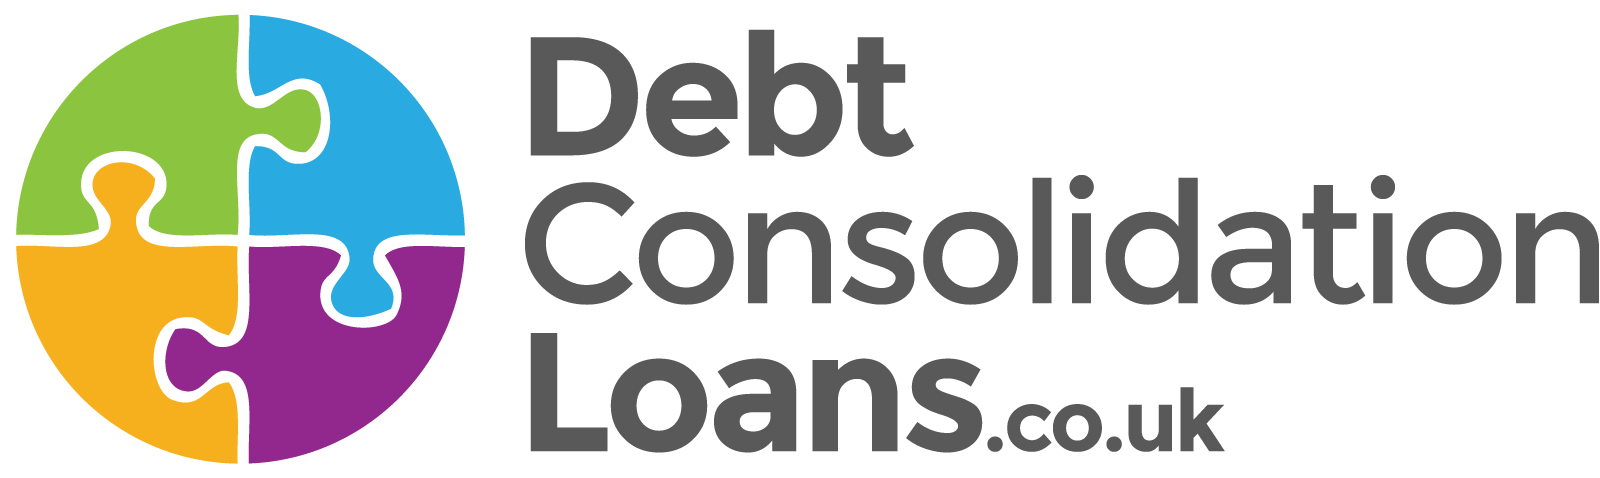 Debt Consolidation Loans UK | Debt Consolidation S